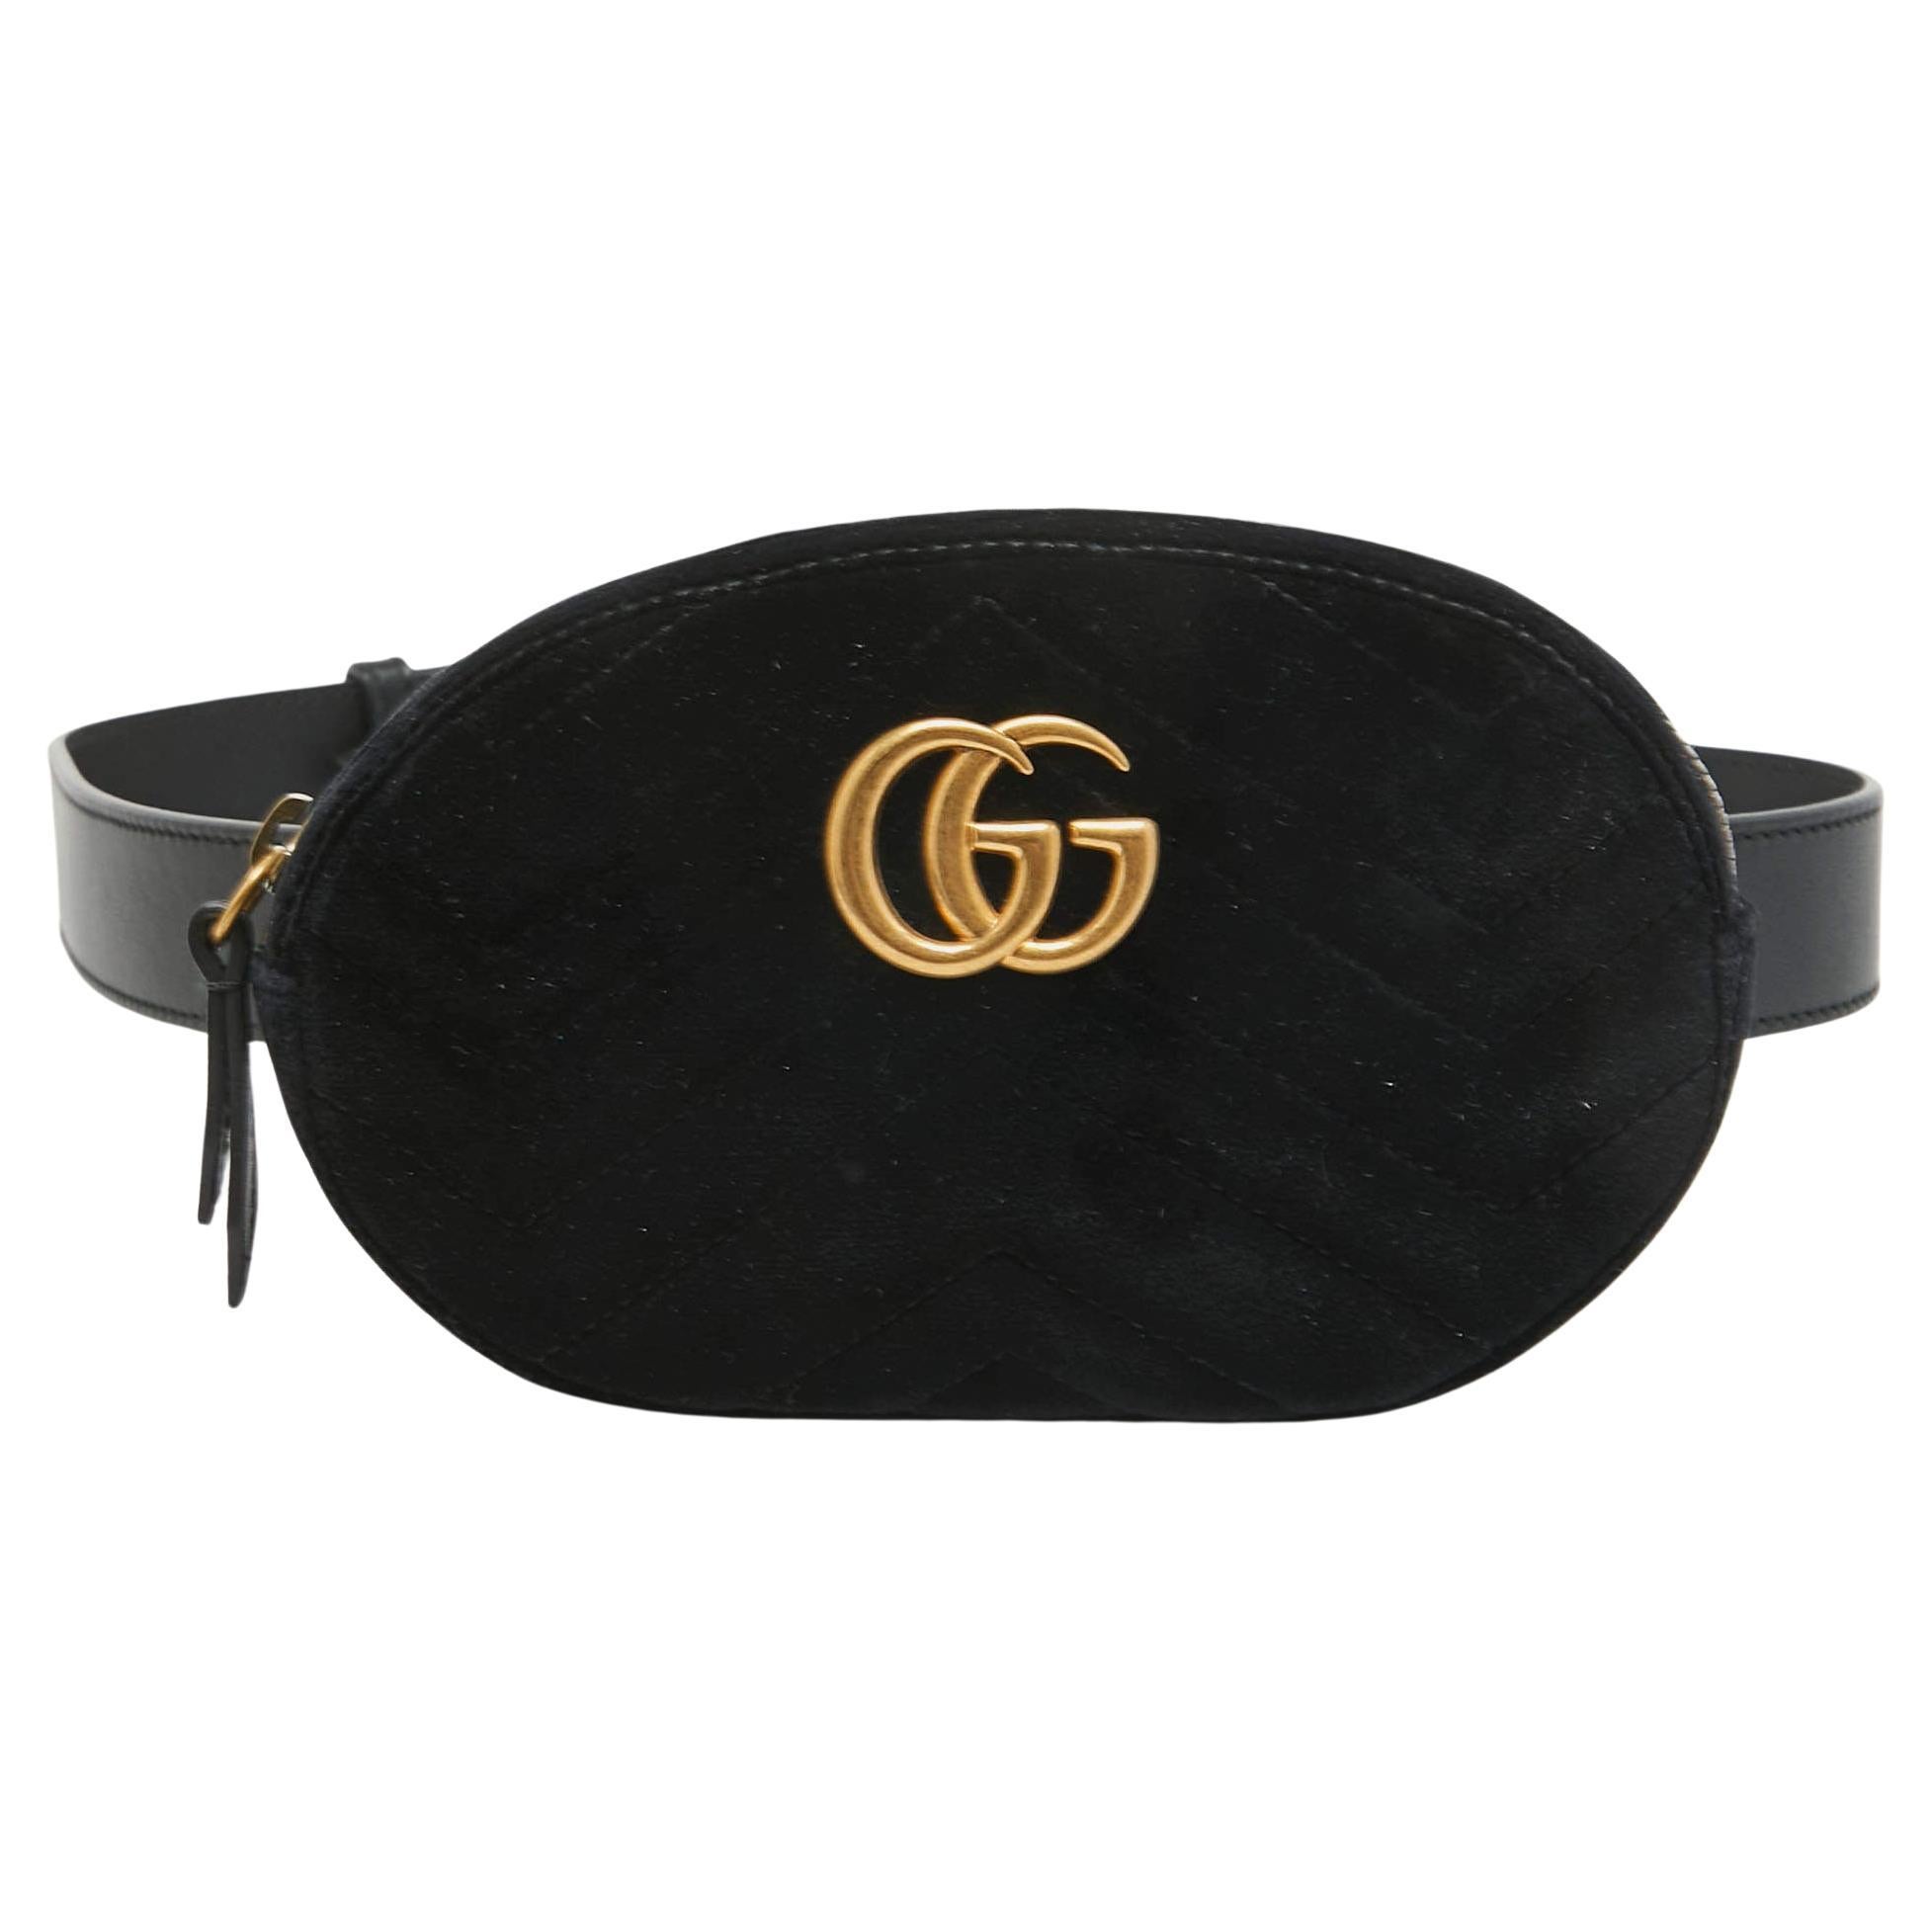 Gucci Black Matelassé Velvet GG Marmont Belt Bag